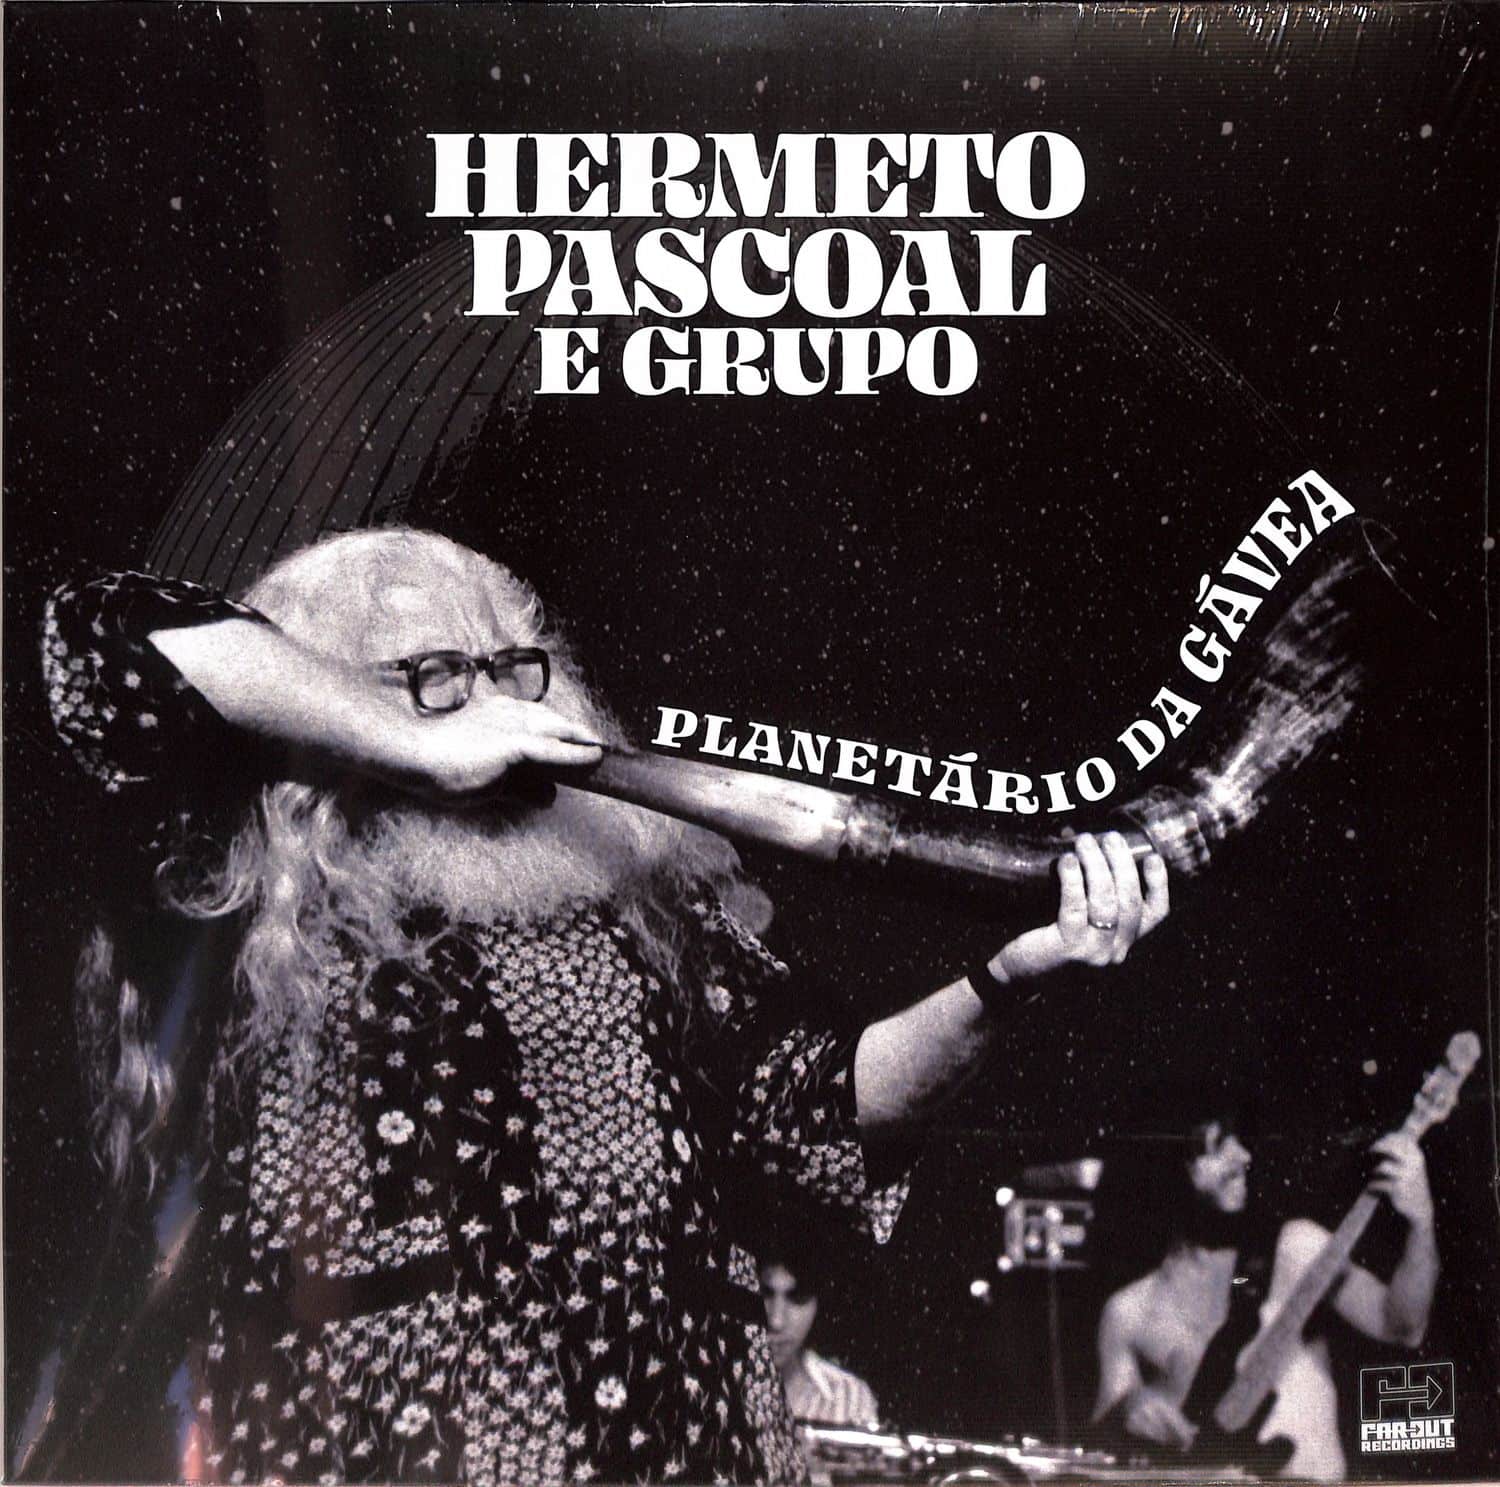 Hermeto Pascoal e Grupo - PLANETARIO DA GAVEA 